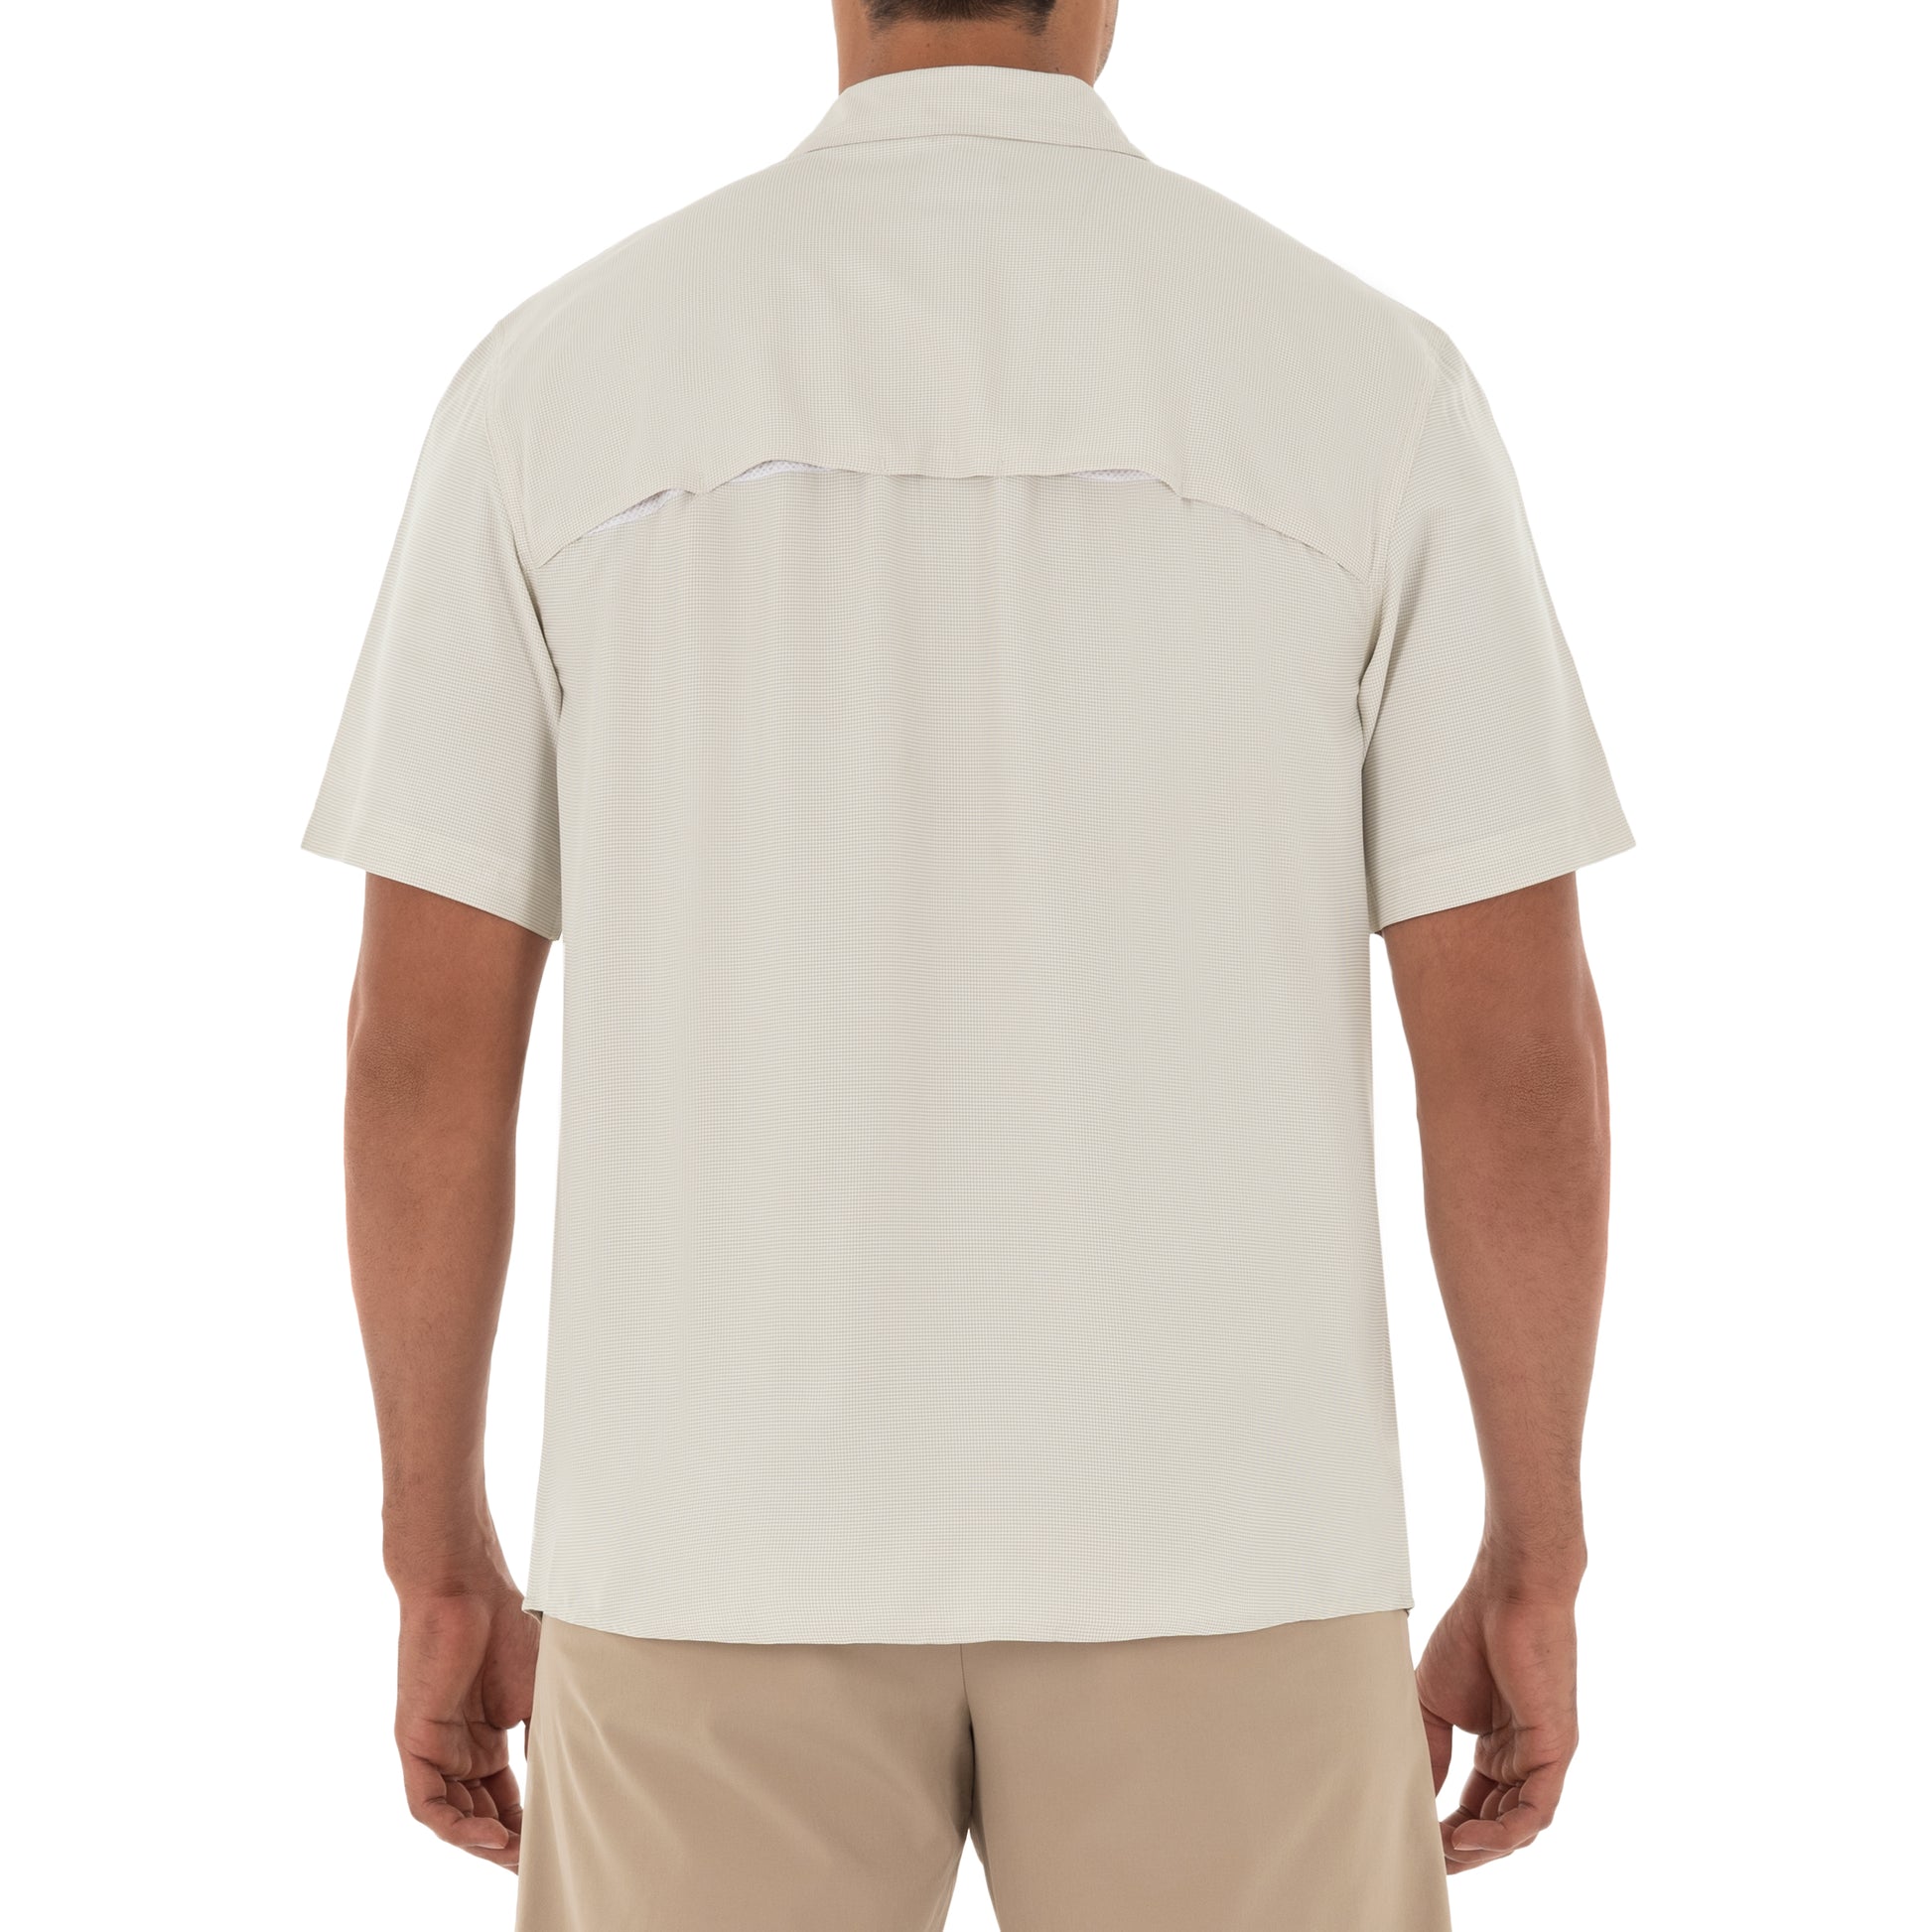 Men's Khaki Short Sleeve Fishing Shirt